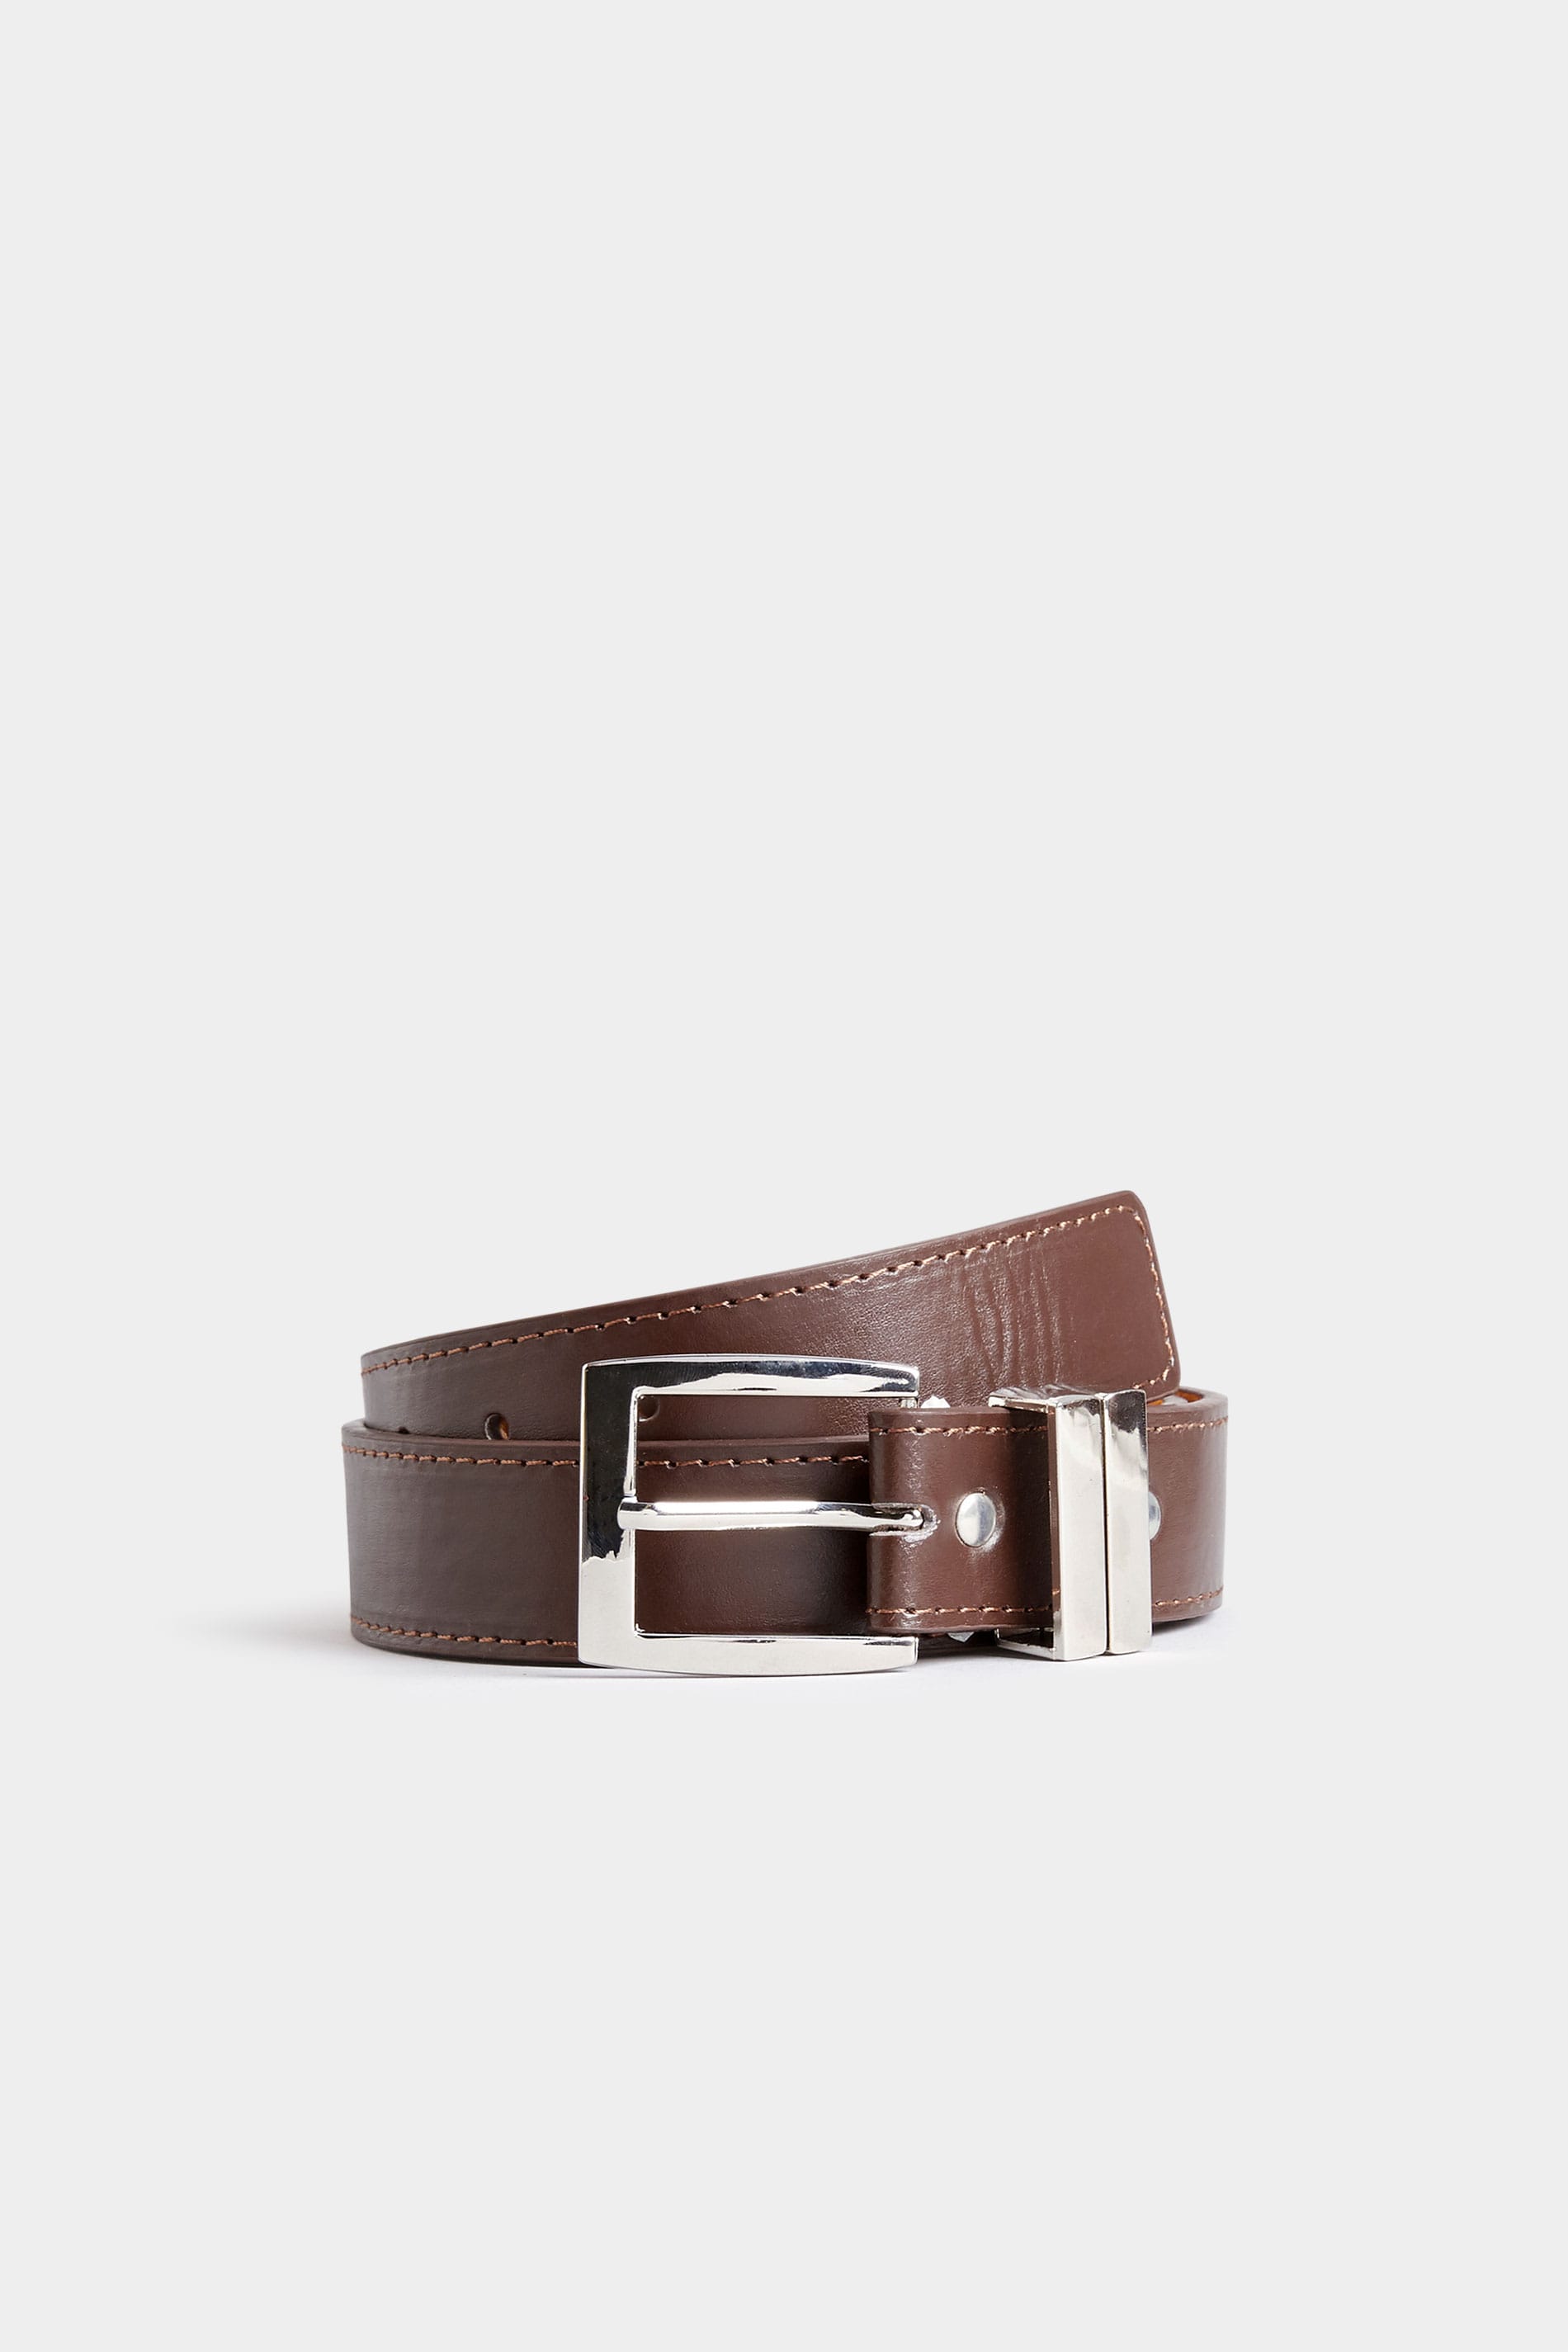 BadRhino Plain Brown Bonded Leather Belt 1